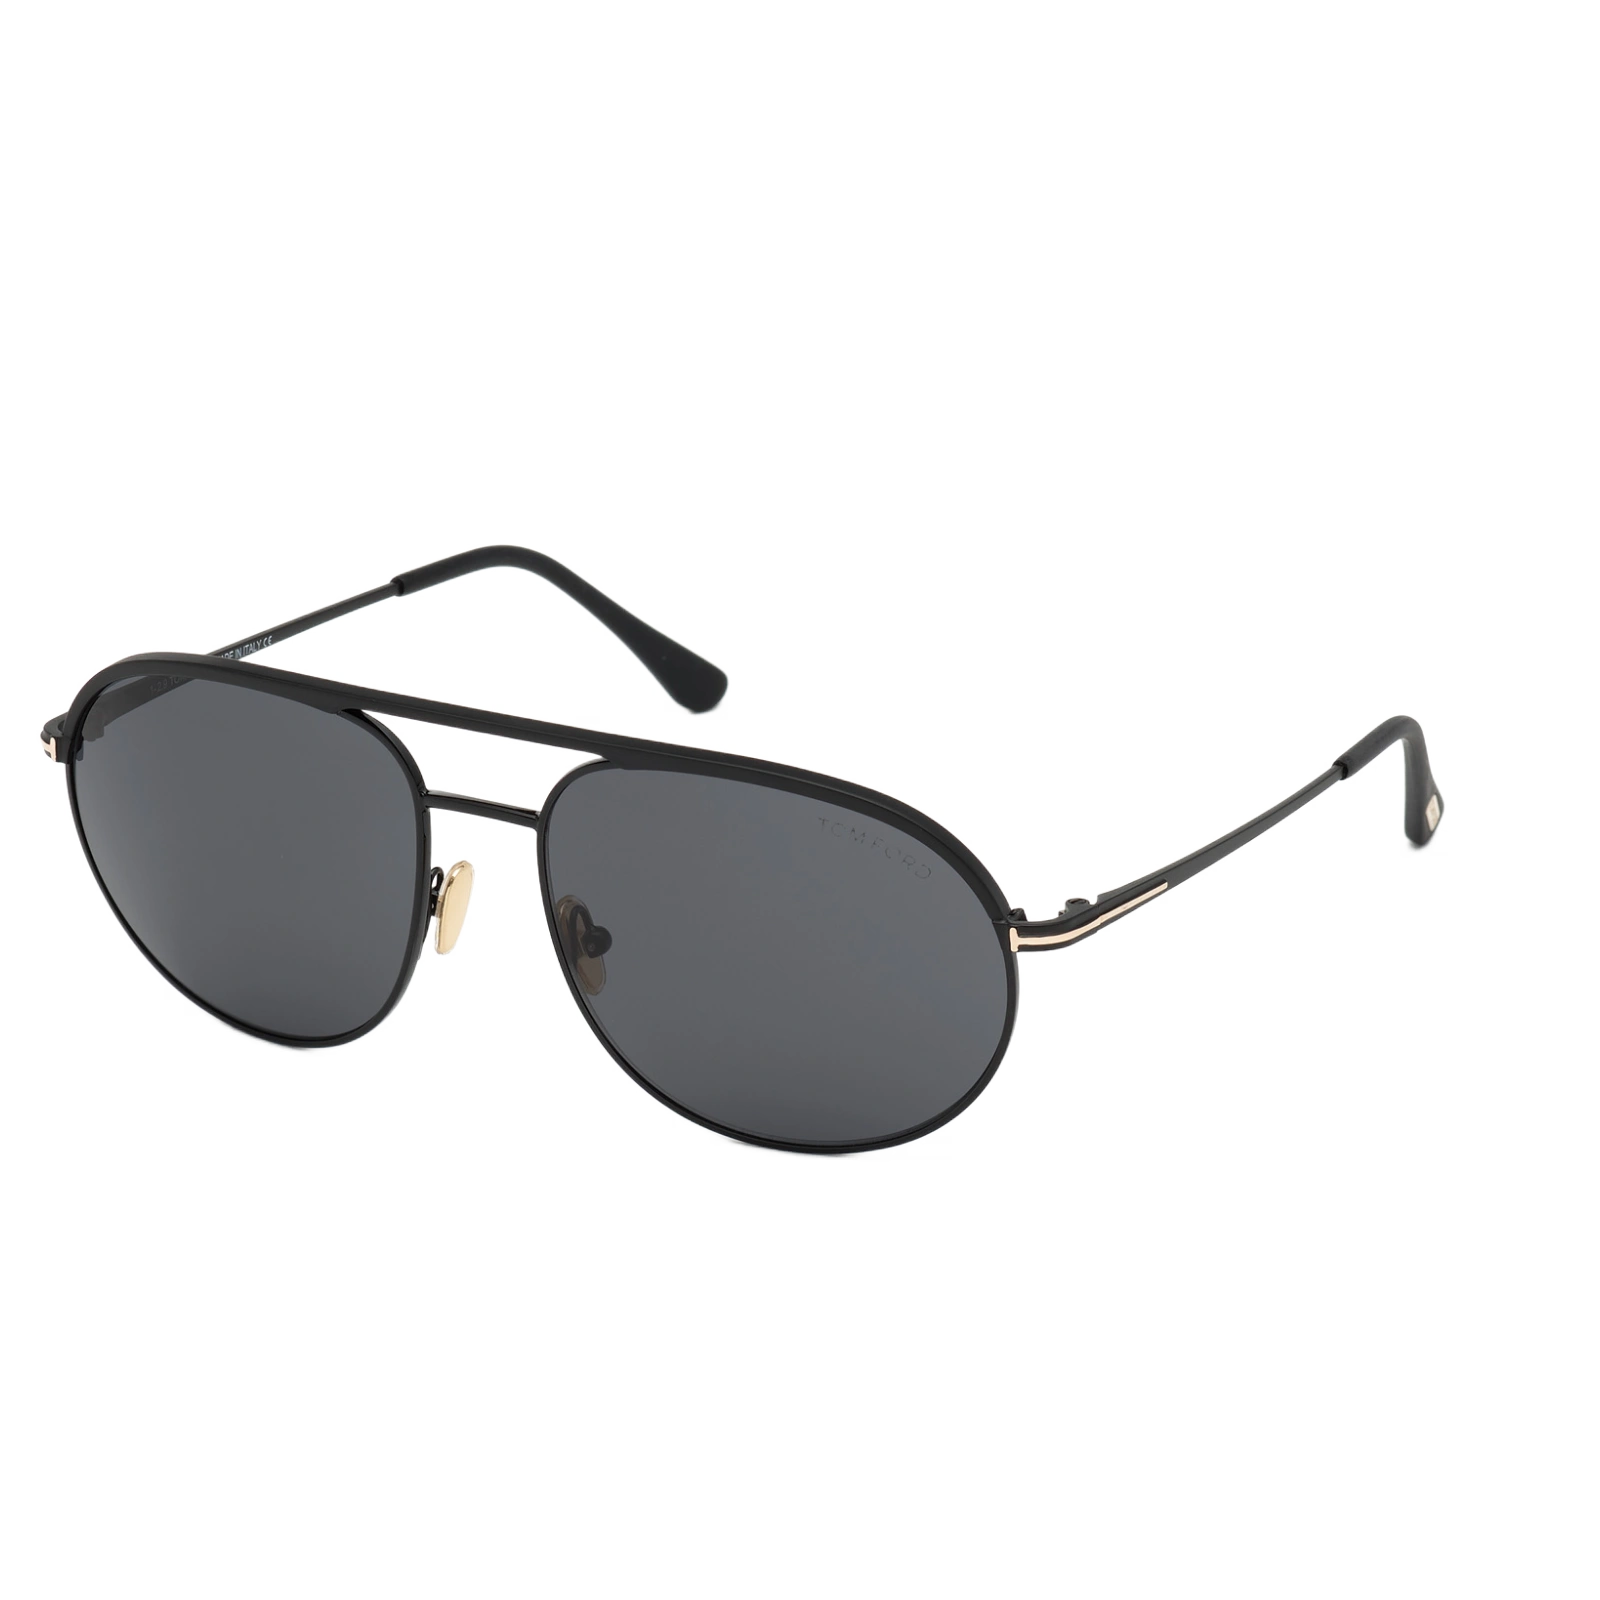 Tom Ford Sunglasses Tom Ford Sunglasses FT0772 02A 61mm Gio Eyeglasses Eyewear UK USA Australia 